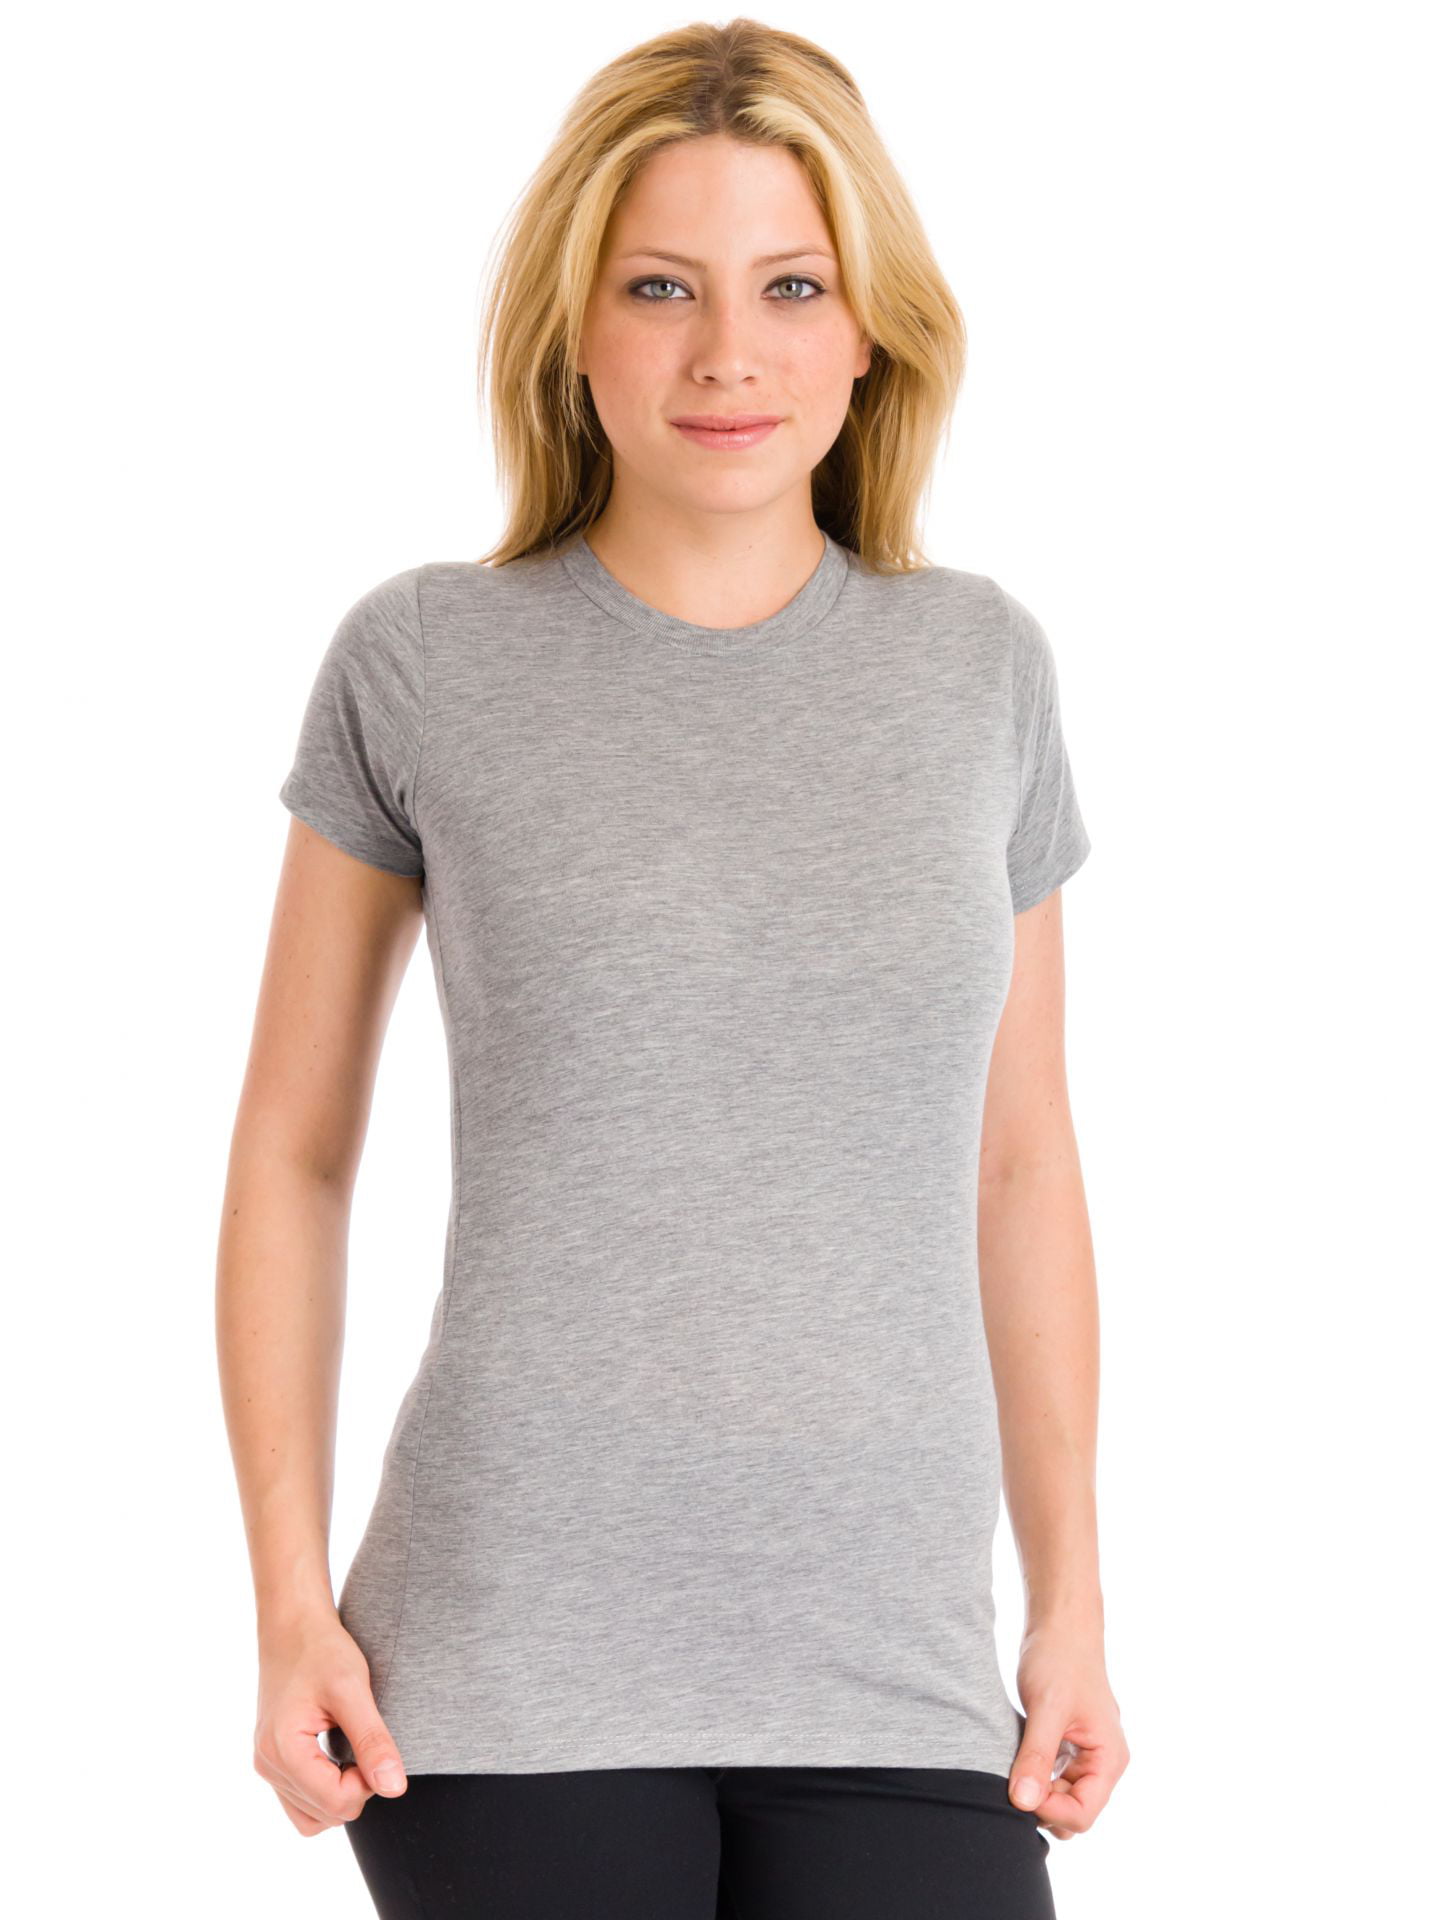 Alternative Women's Basic Crew Shirt, Heather Grey, XLarge - Walmart.com